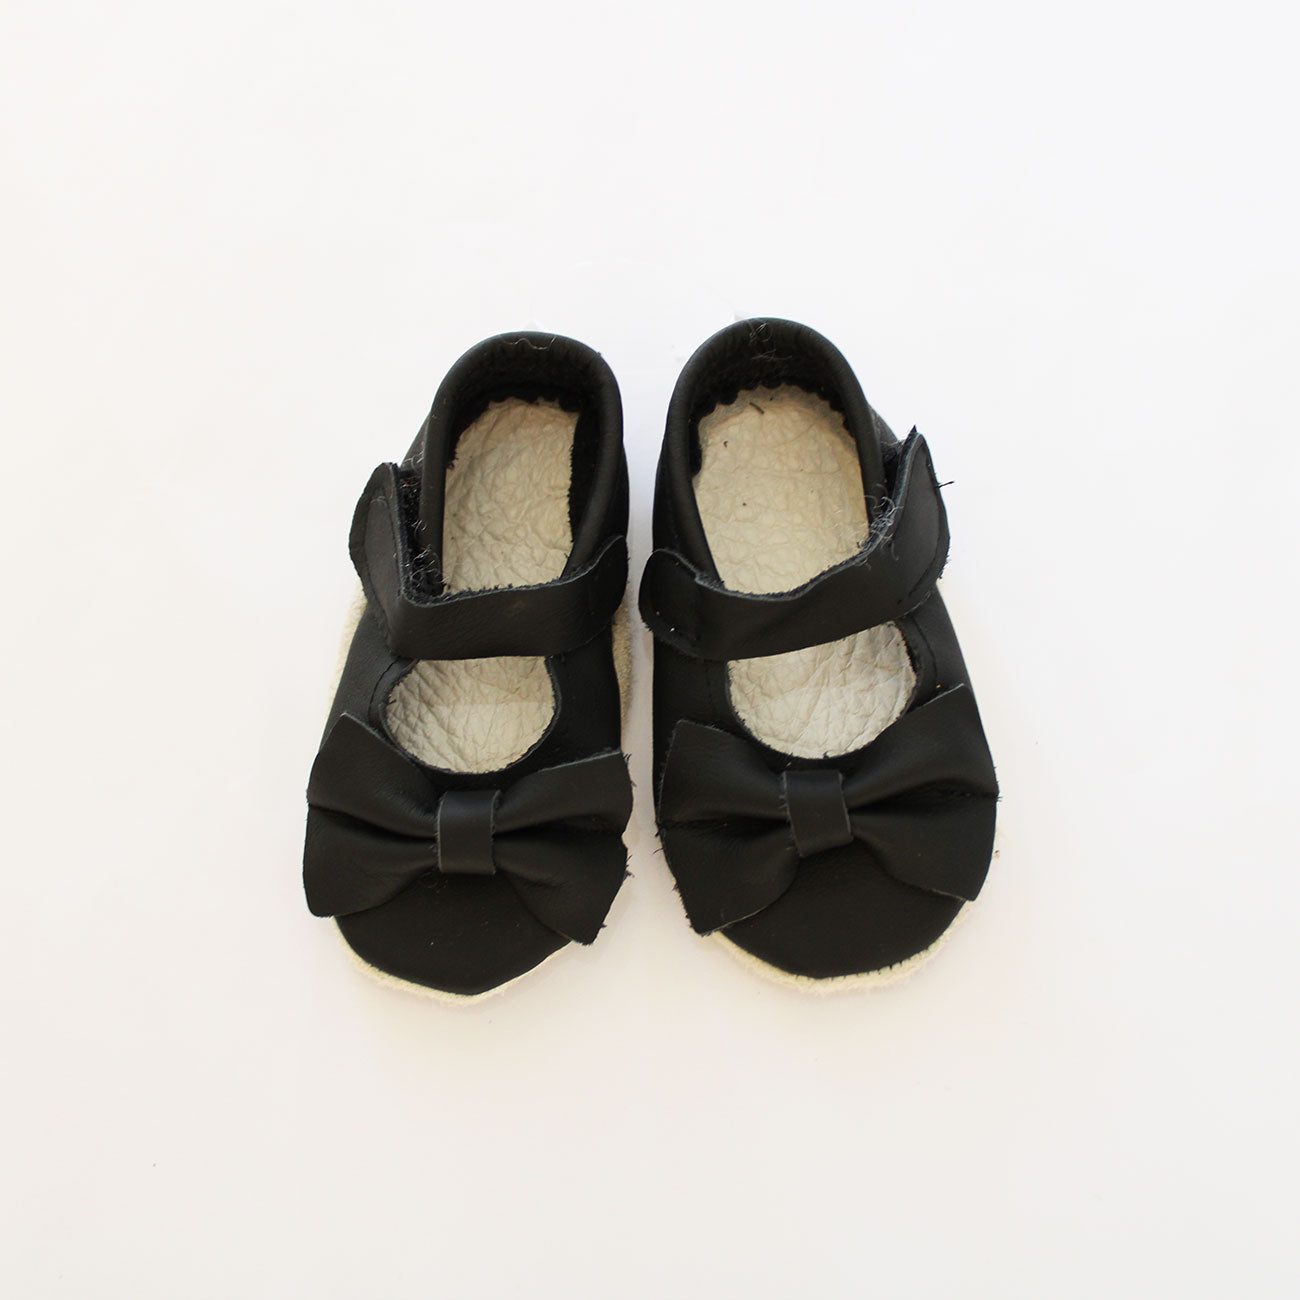 Emily bow shoes - Black